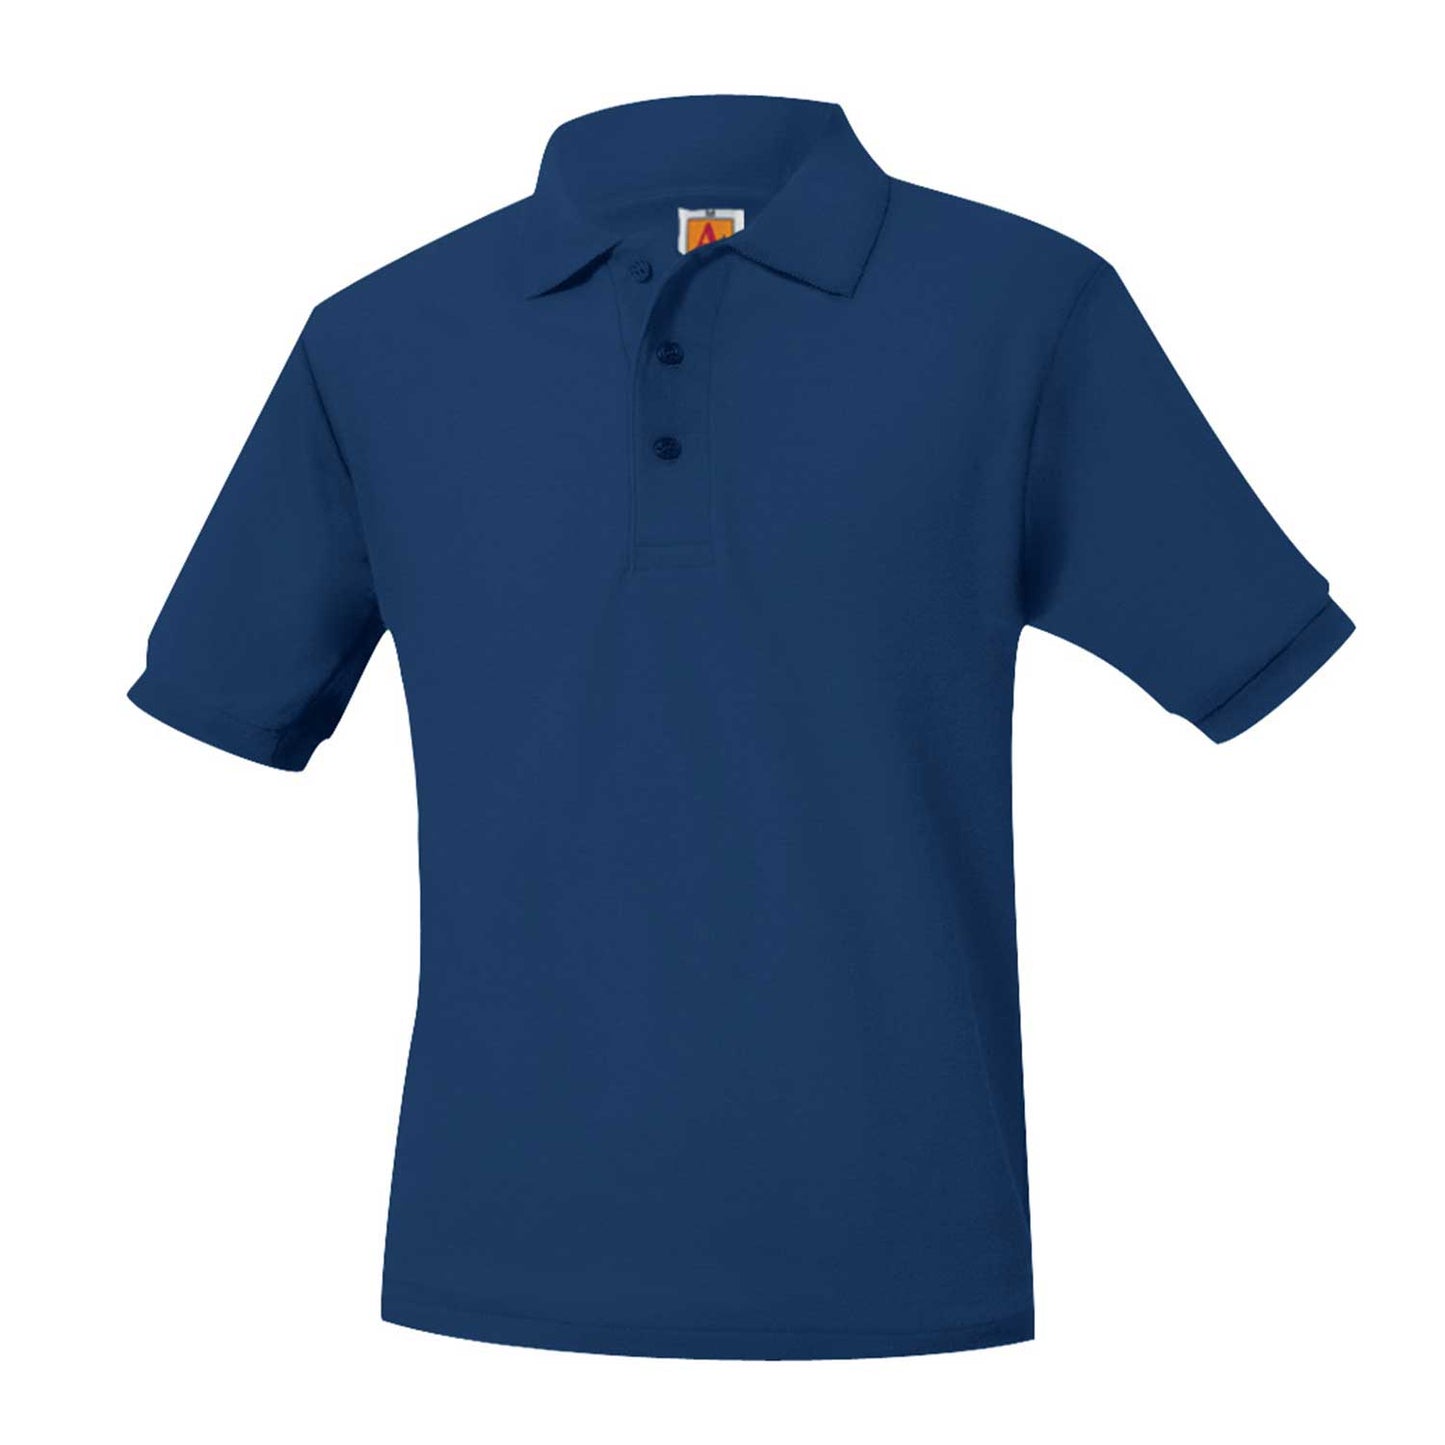 Unisex Short Sleeve Pique Knit Polo-Navy